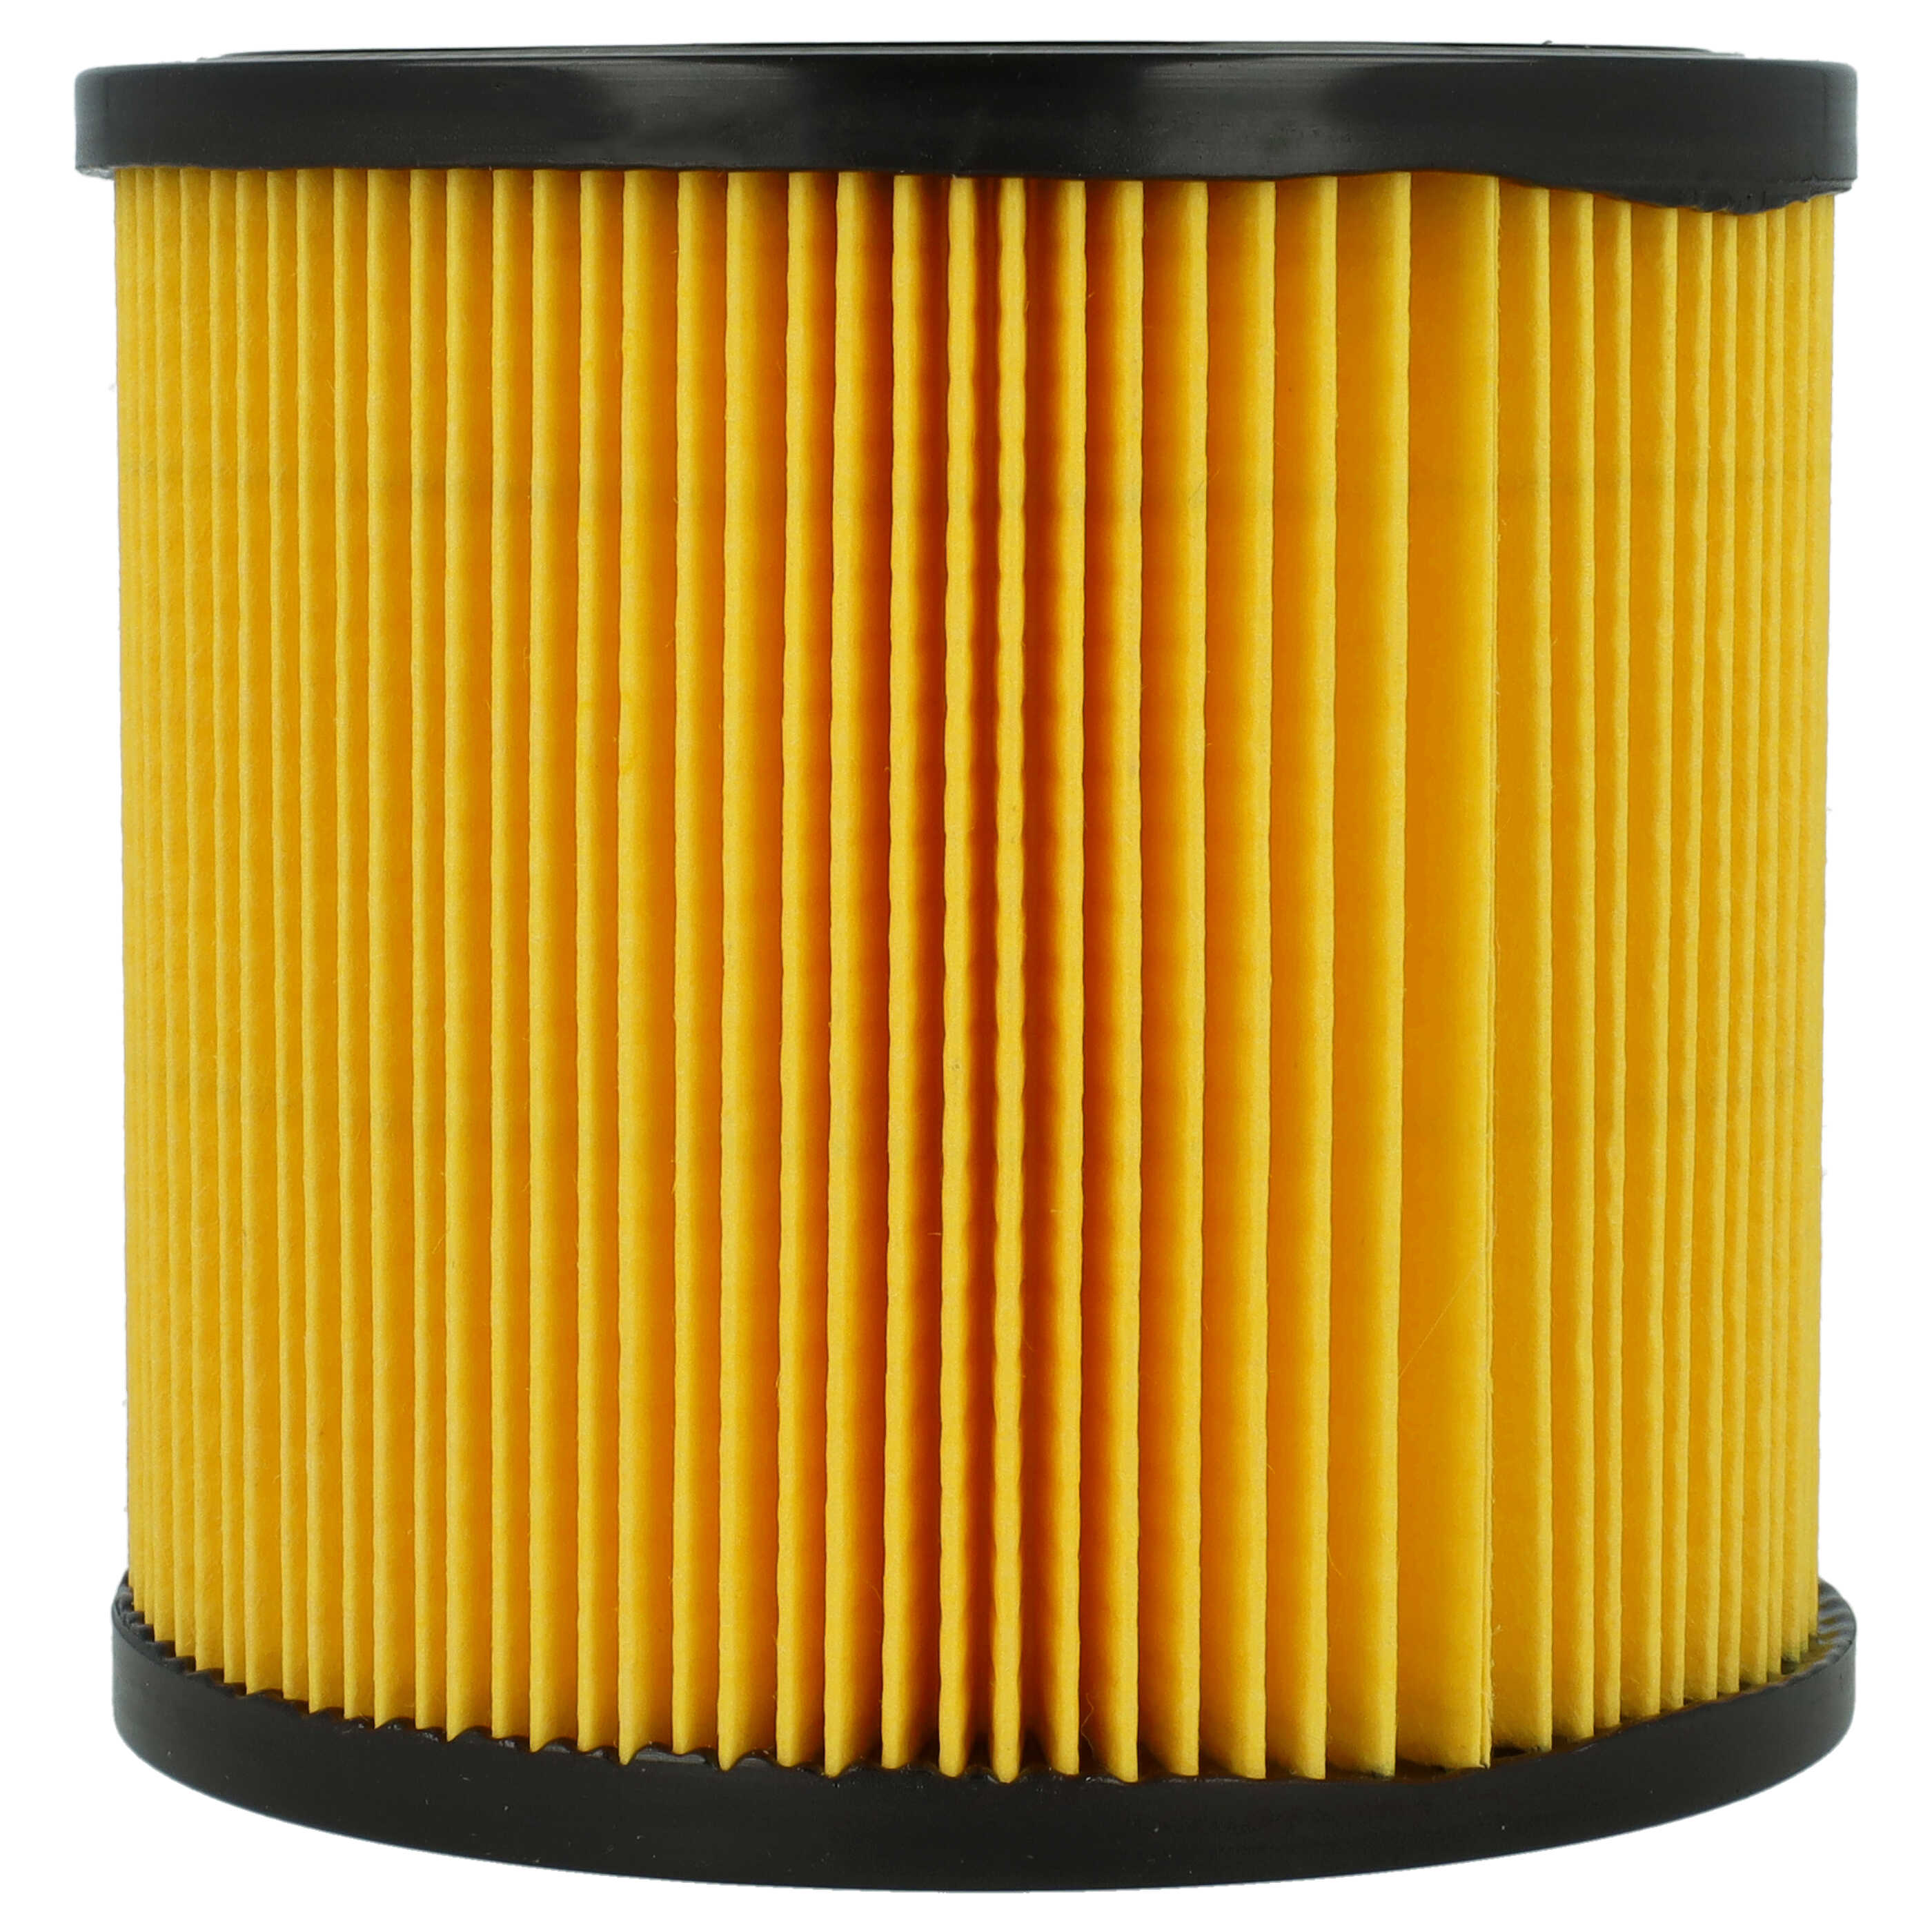 1x cartridge filter replaces Topcraft K707F, R 693, K704F for Topcraft Vacuum Cleaner, orange